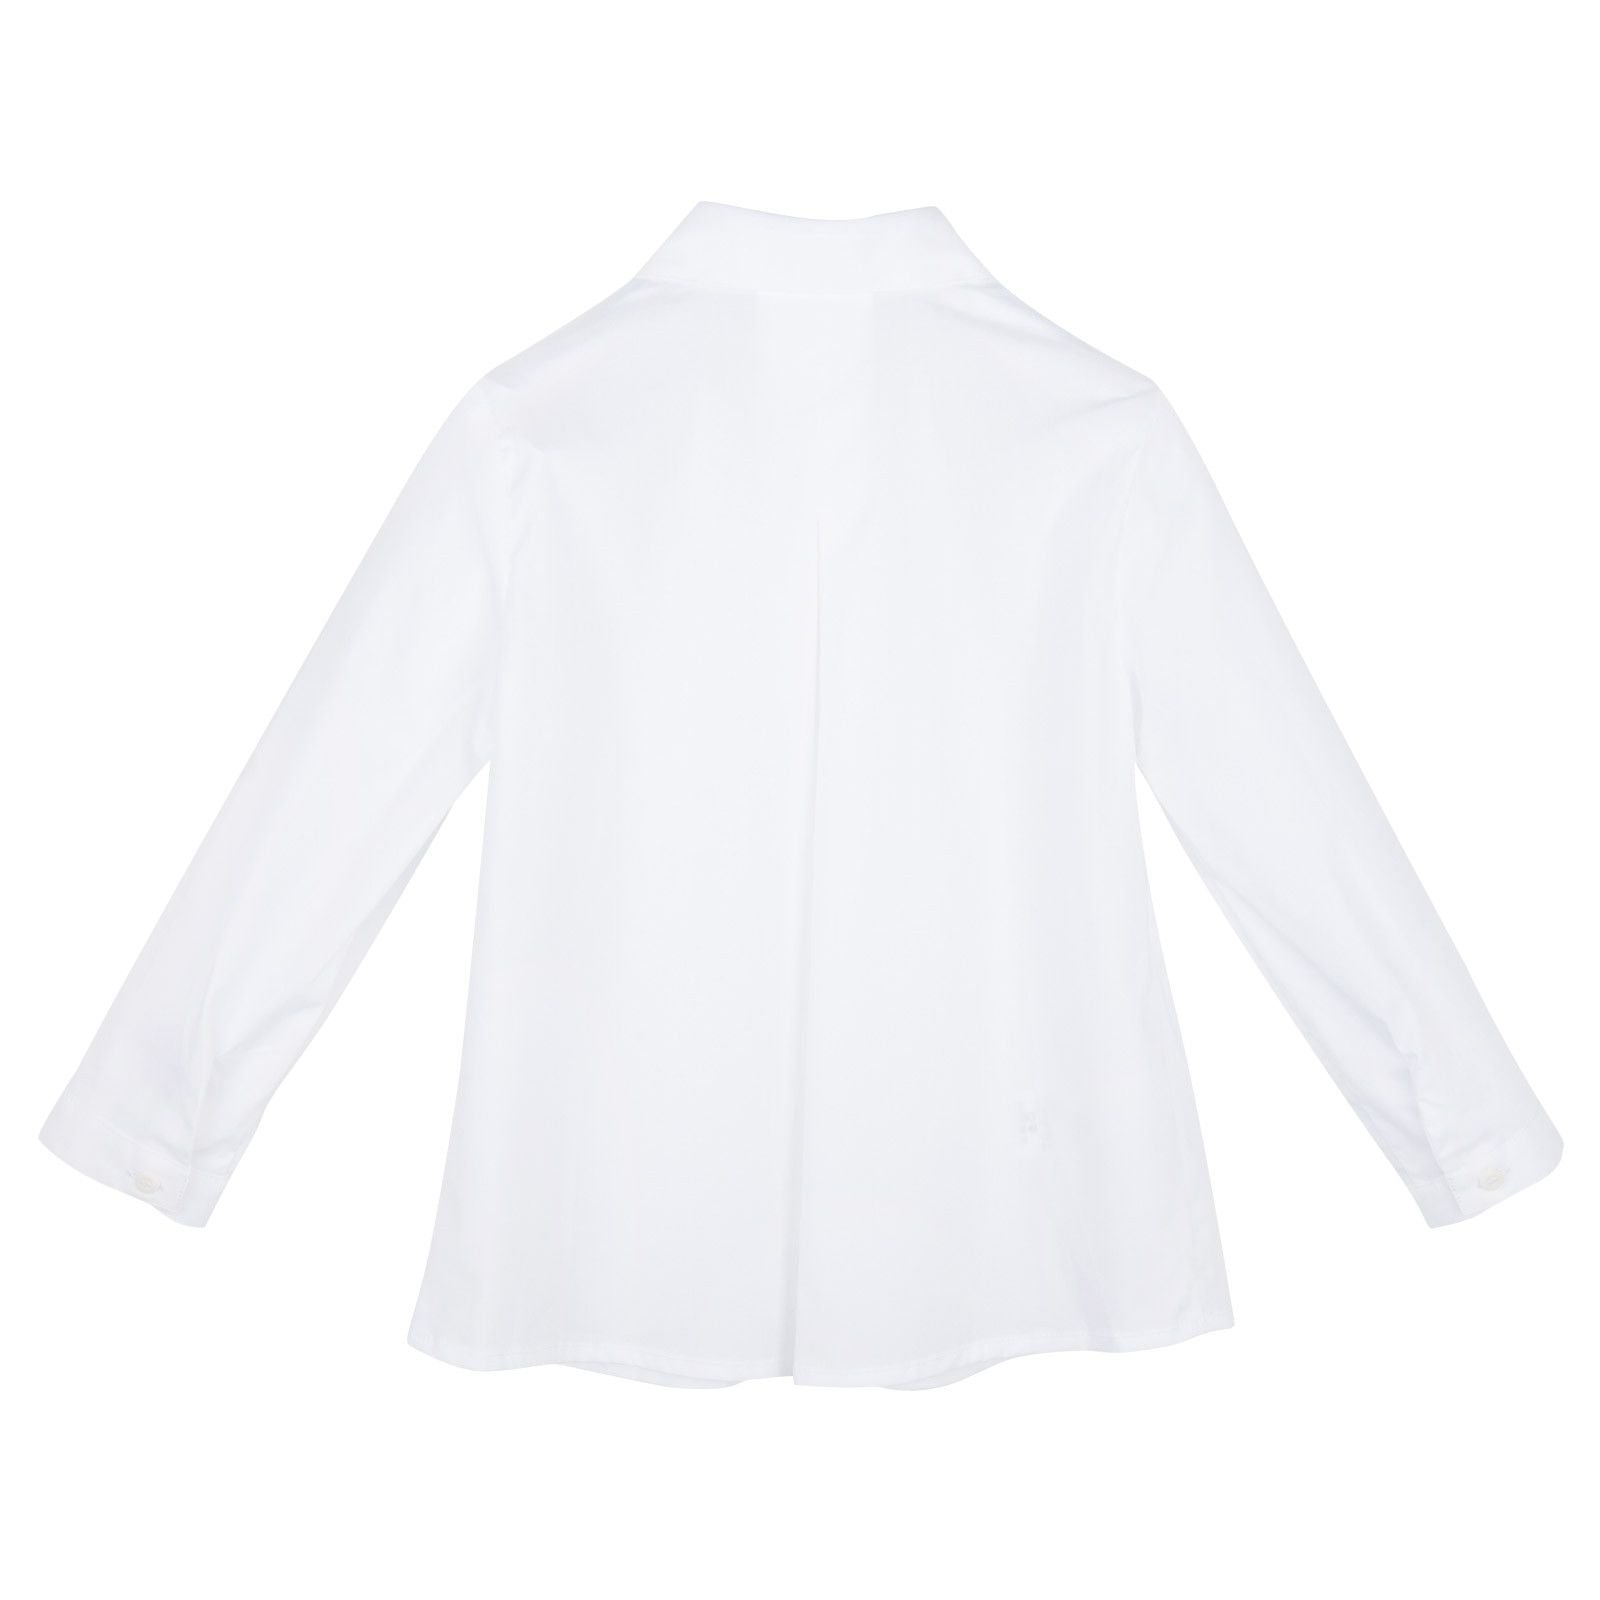 Girls White Cotton Blouse With Bow Trims - CÉMAROSE | Children's Fashion Store - 2